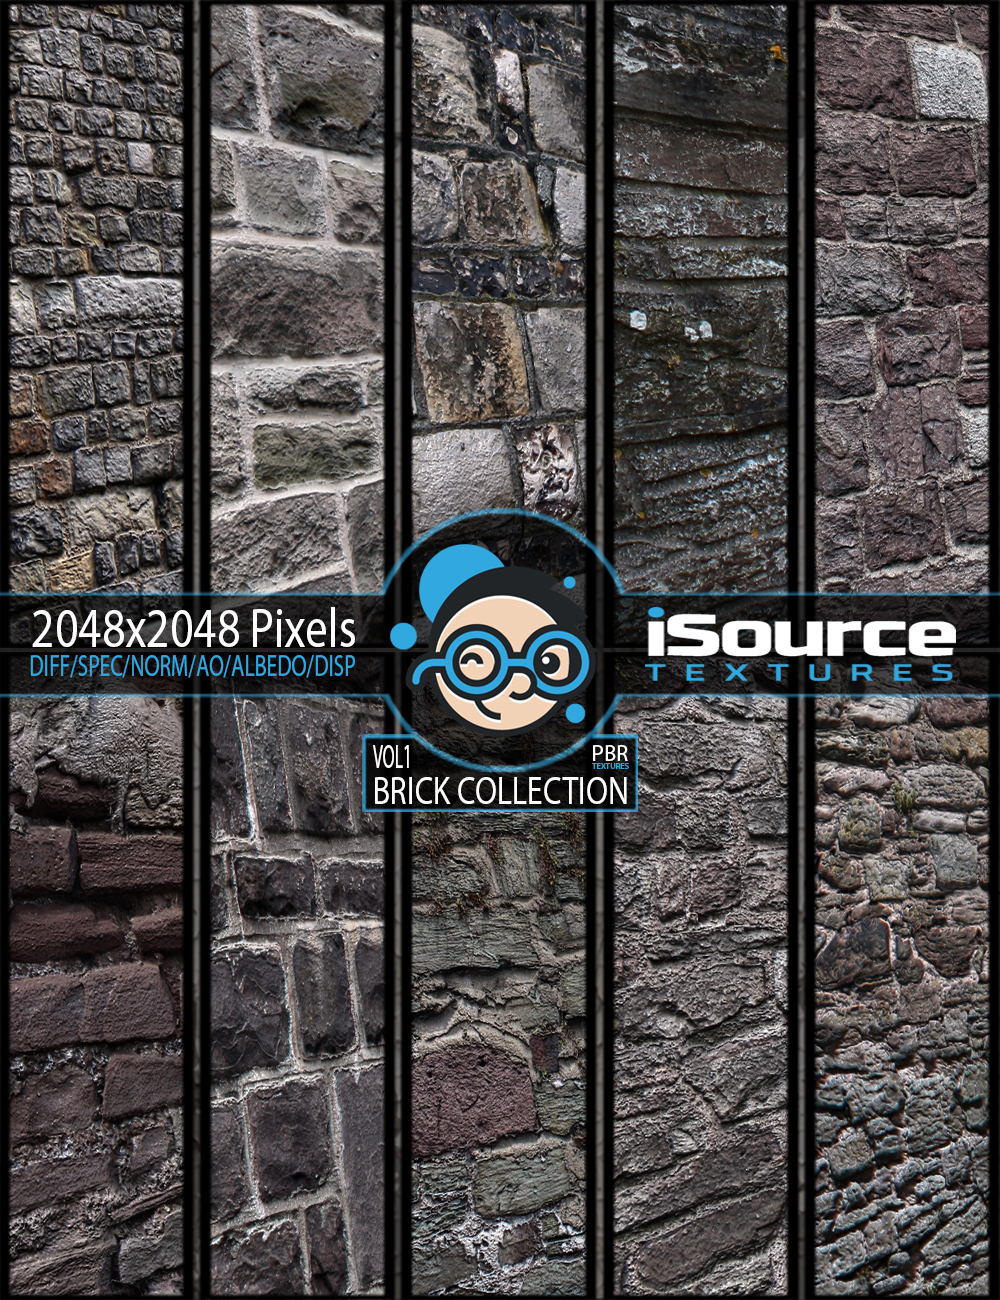 Brick Collection Merchant Resource - Vol1 (PBR Textures) by: iSourceTextures, 3D Models by Daz 3D